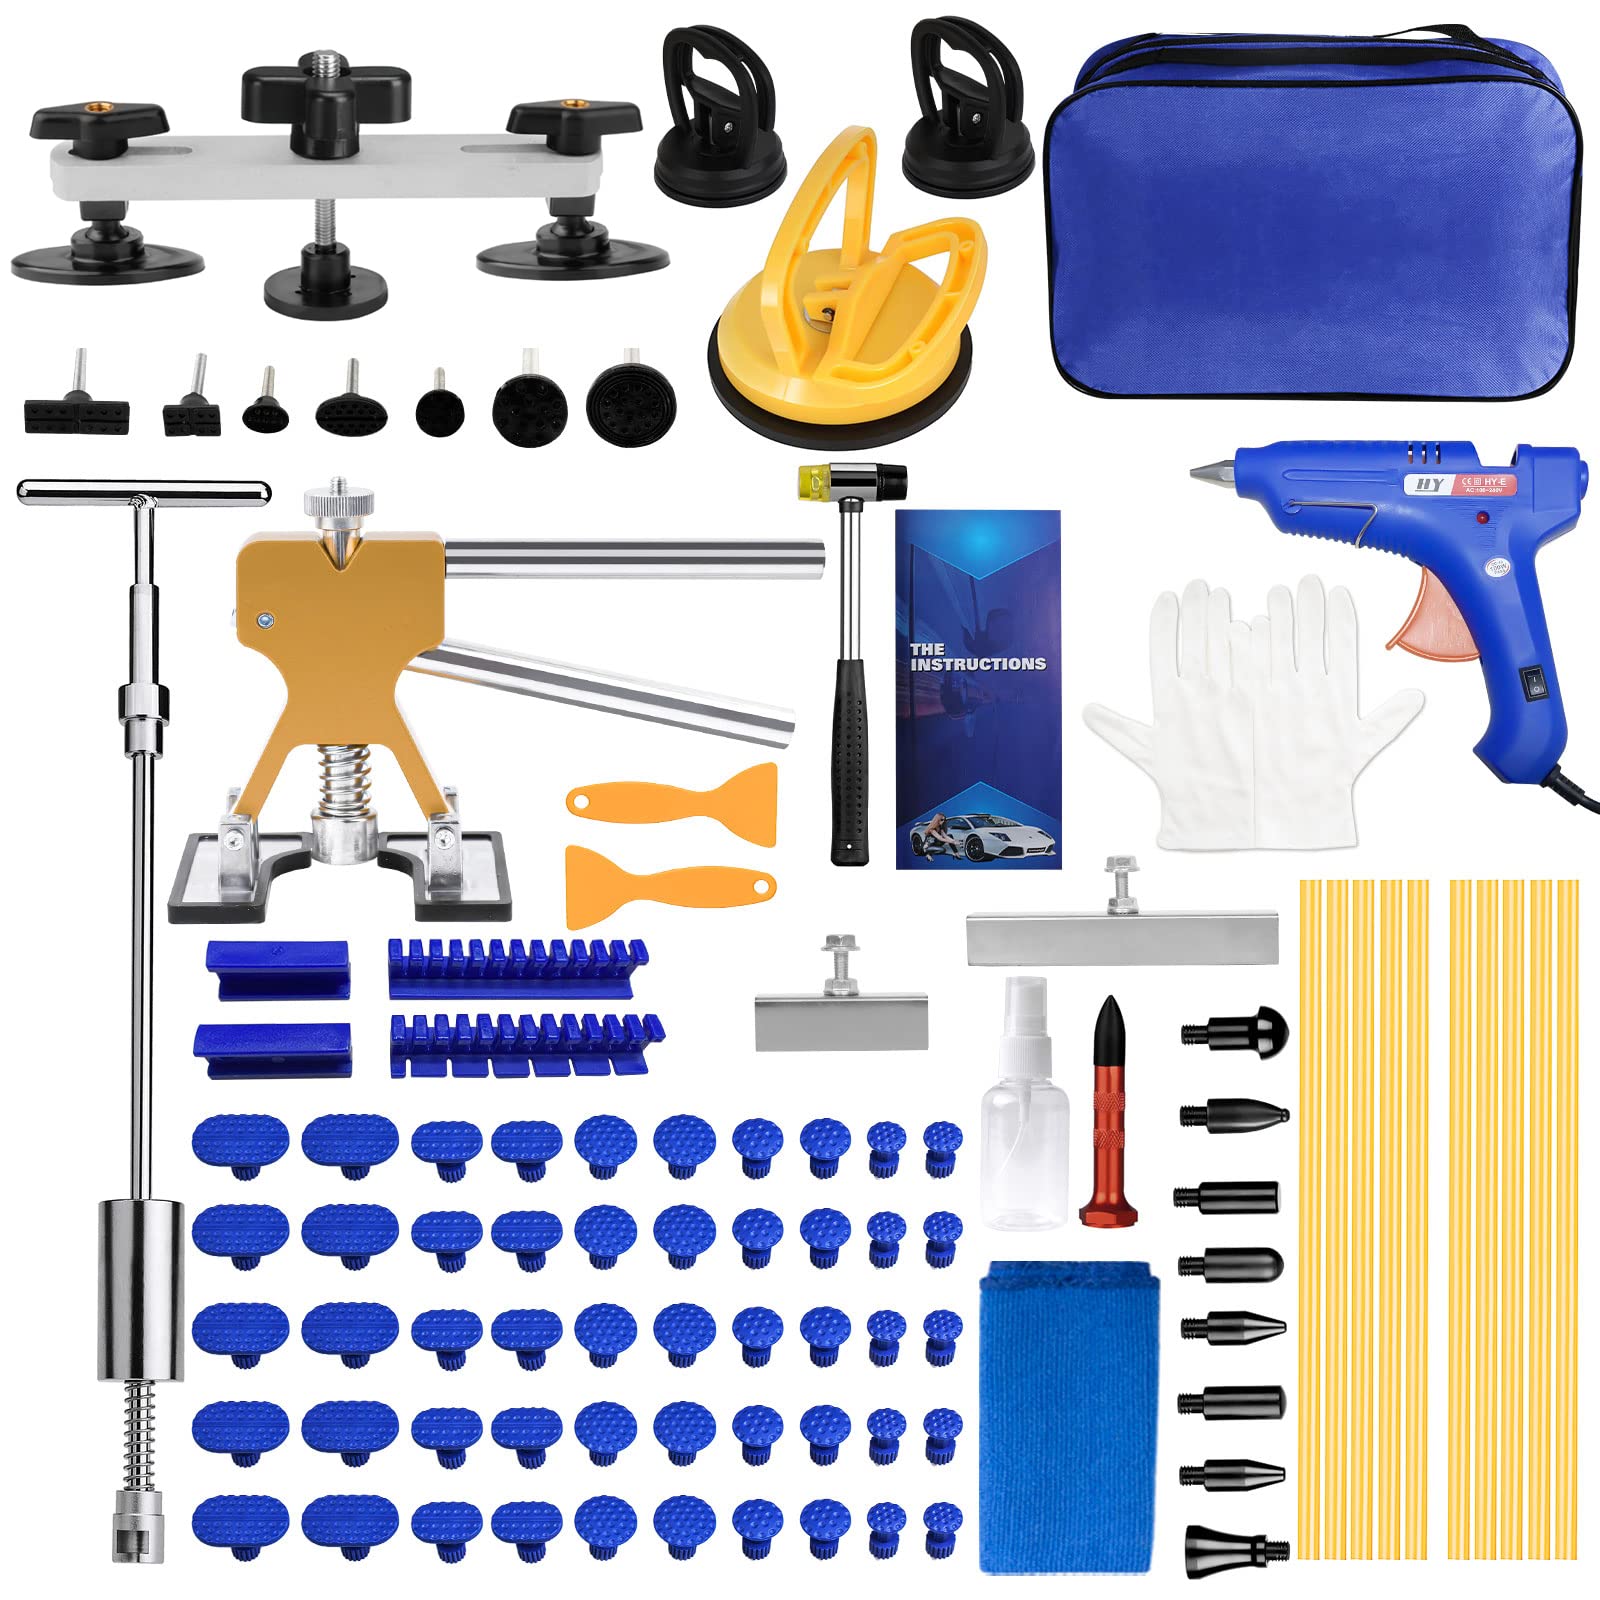 Zeusfire 97Pcs Dent Puller Kit, Paintless Dent Repair Kit With Golden Lifter, Slide Hammer T-Bar Dent Puller, Bridge Puller, Suc